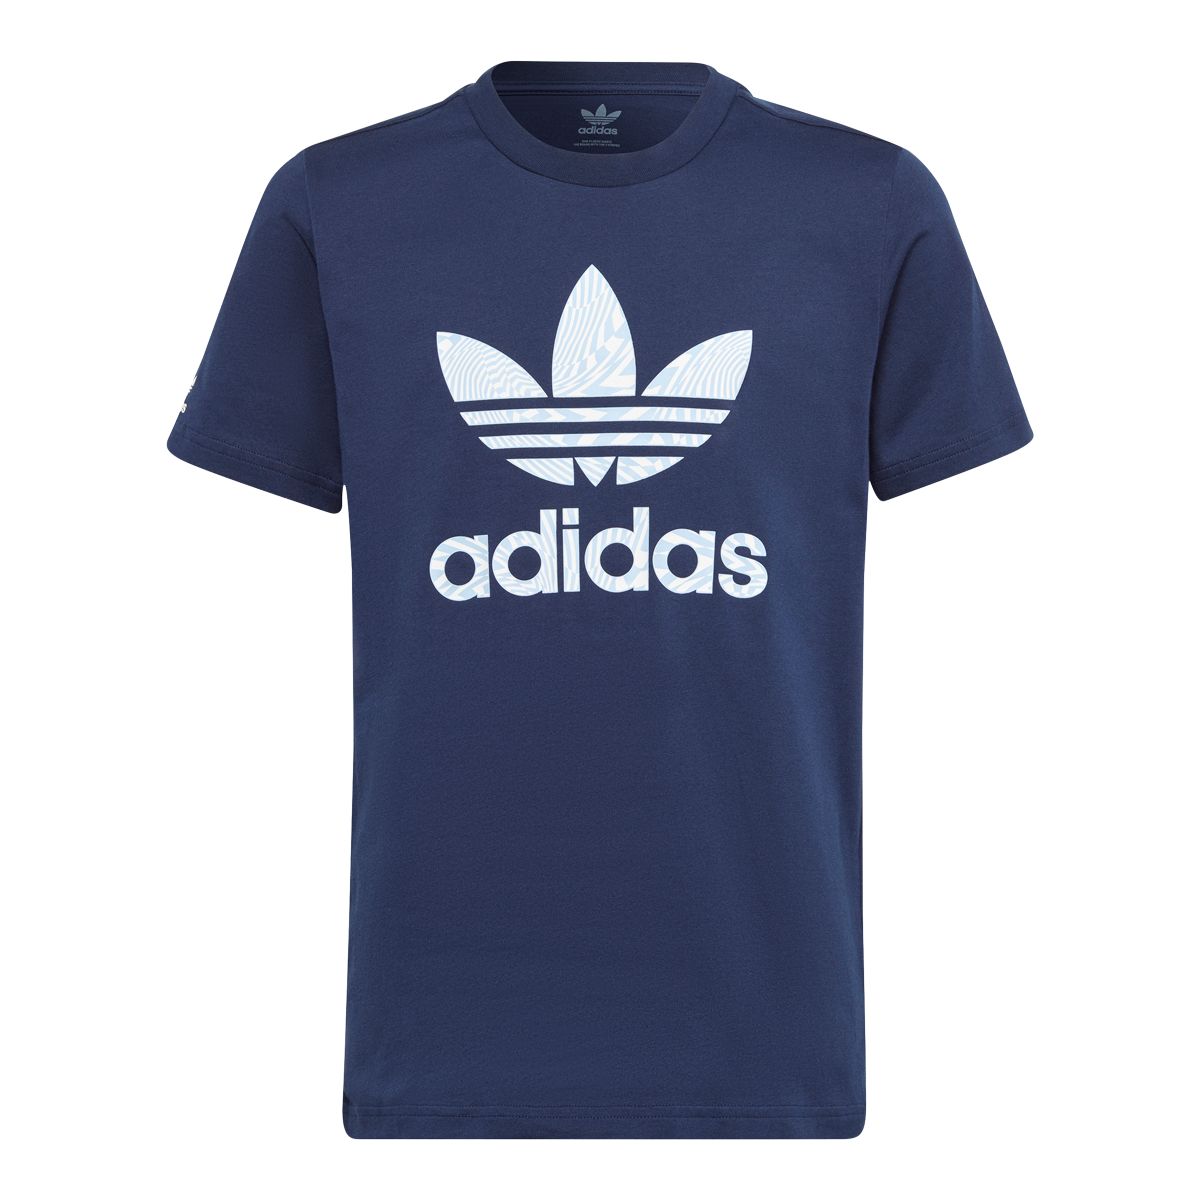 adidas Originals Boys' Re-Kive T Shirt